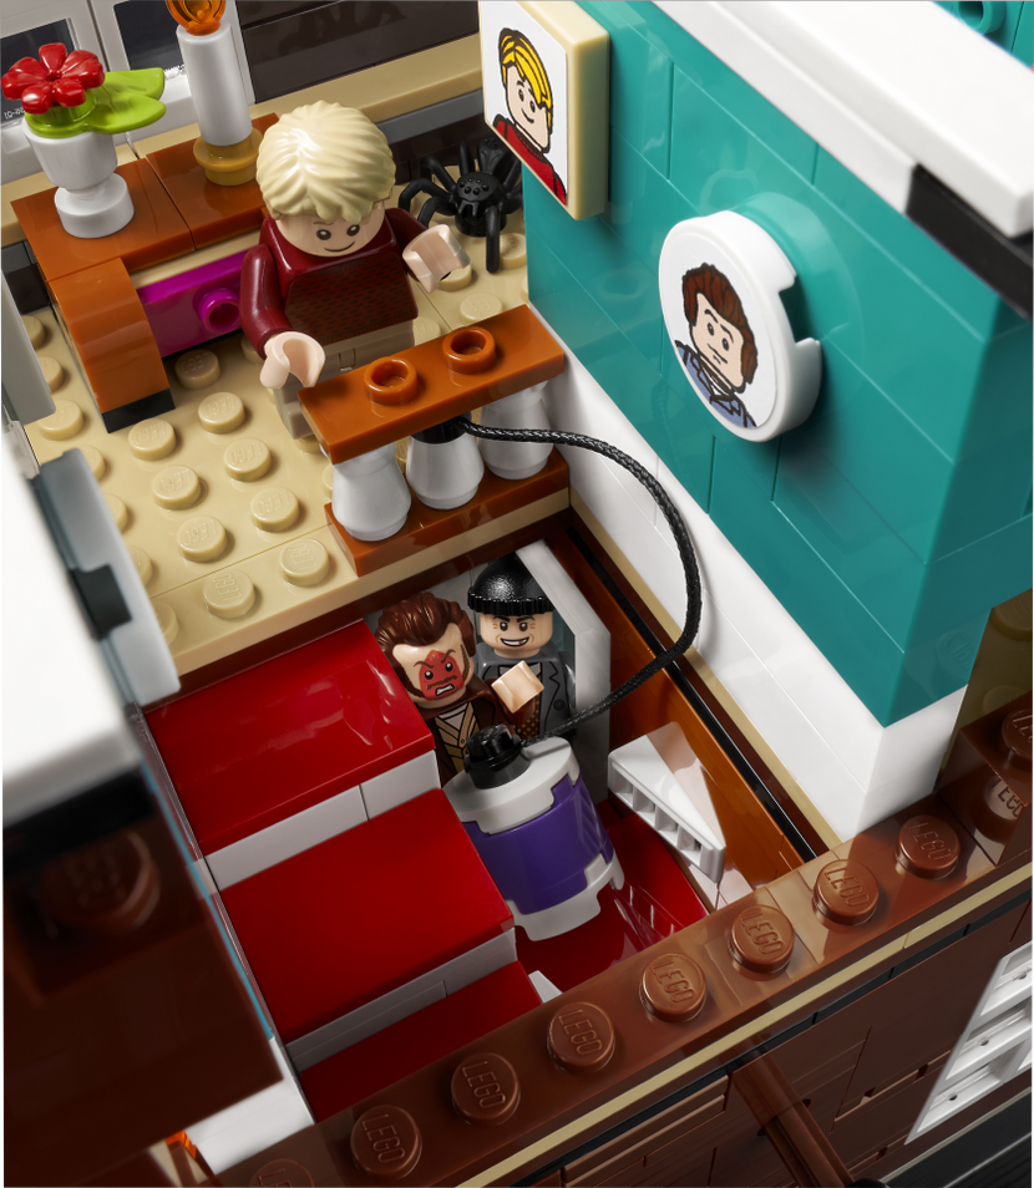 LEGO 21330 Home Alone (Один дома)